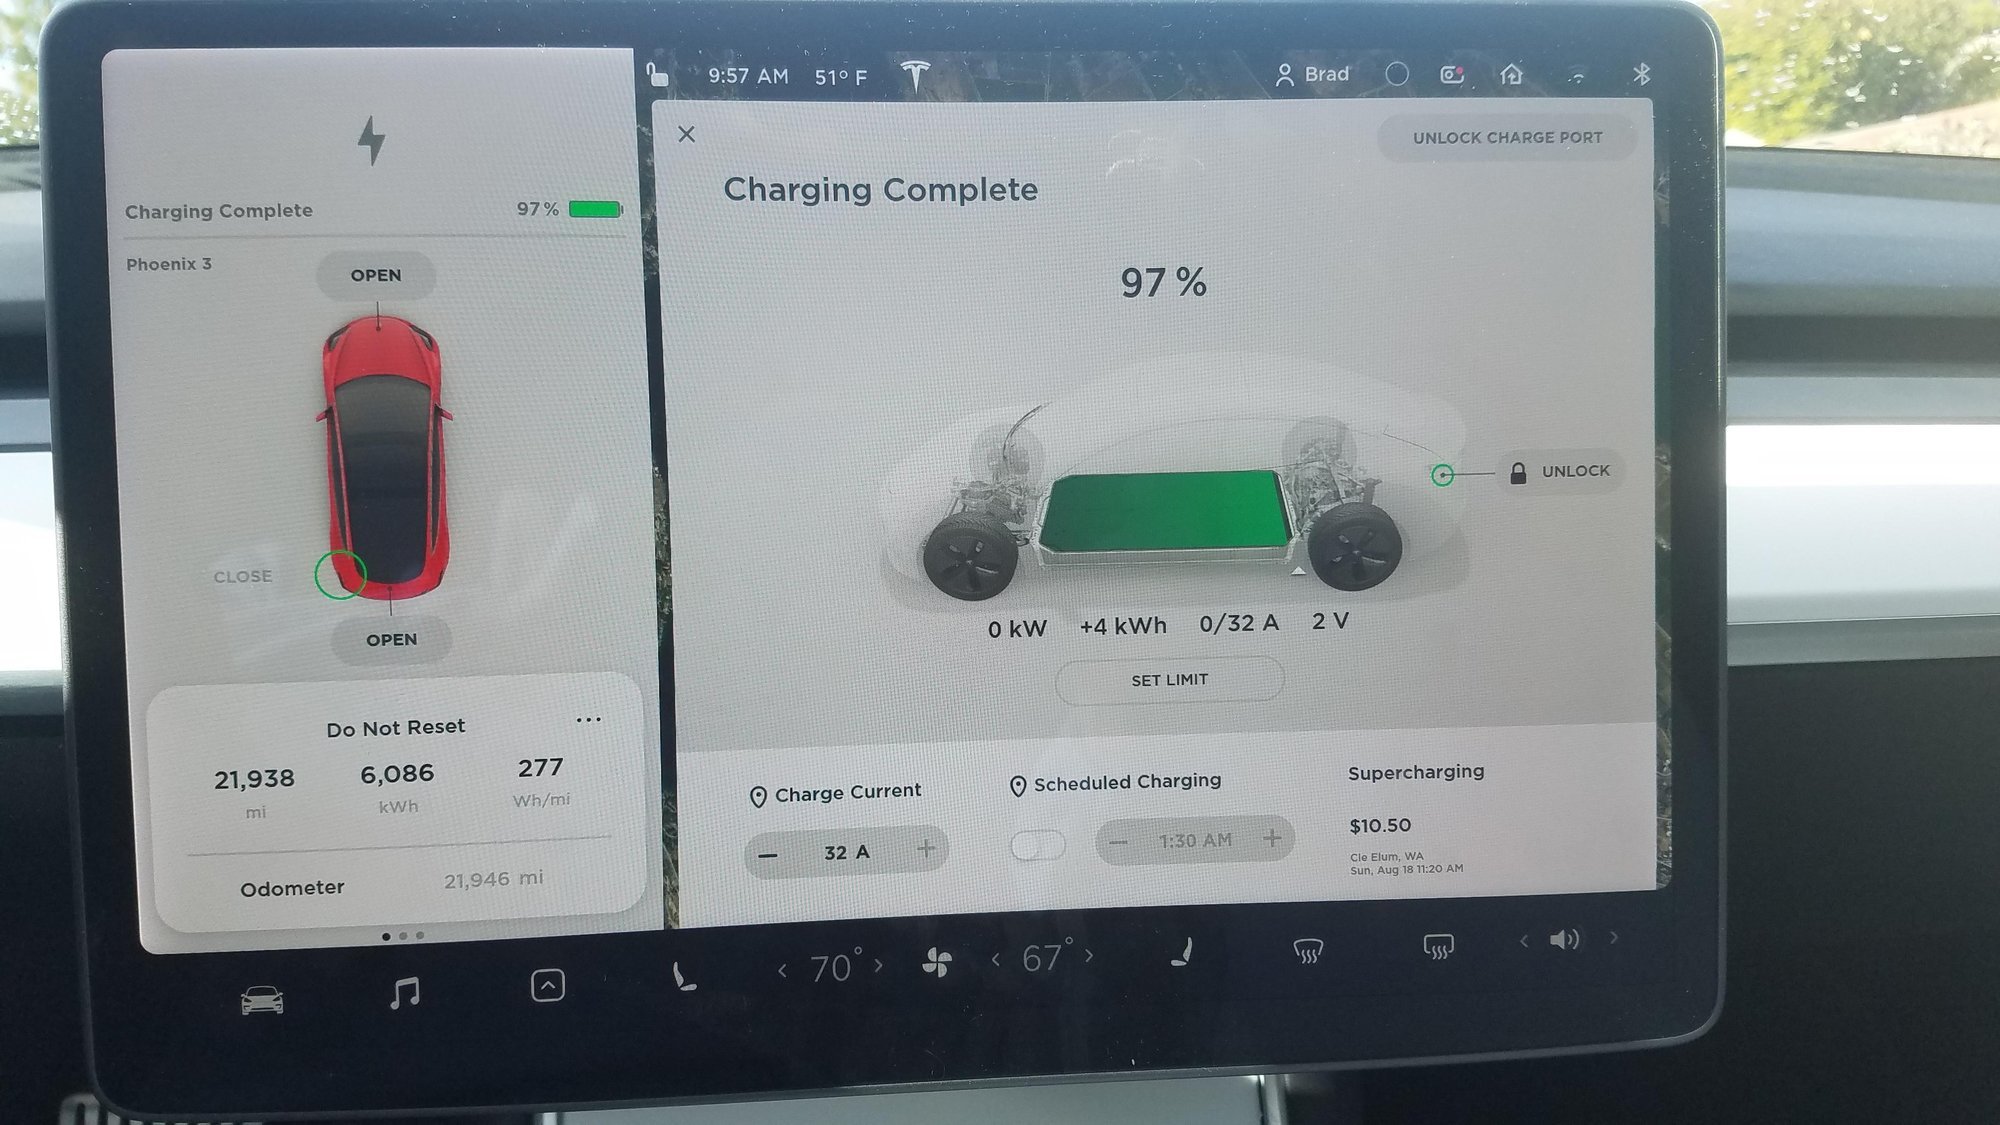 2019-10-18 Phoenix 3 - Full Charge attempt - Charging screenshot.jpg